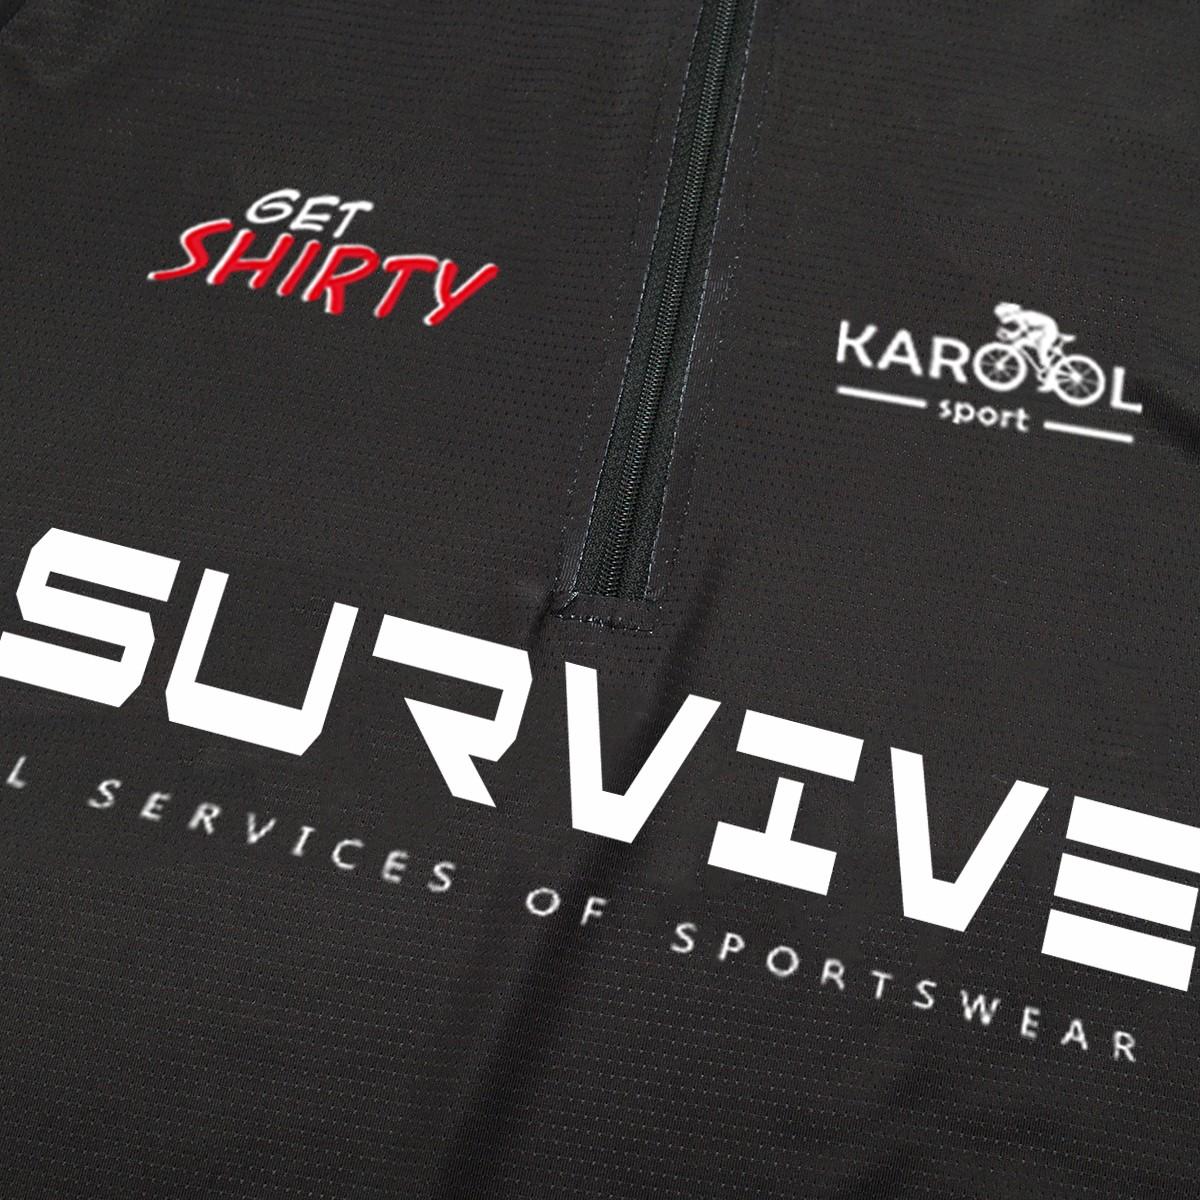 Karool custom running shirts customized for basket ball-3